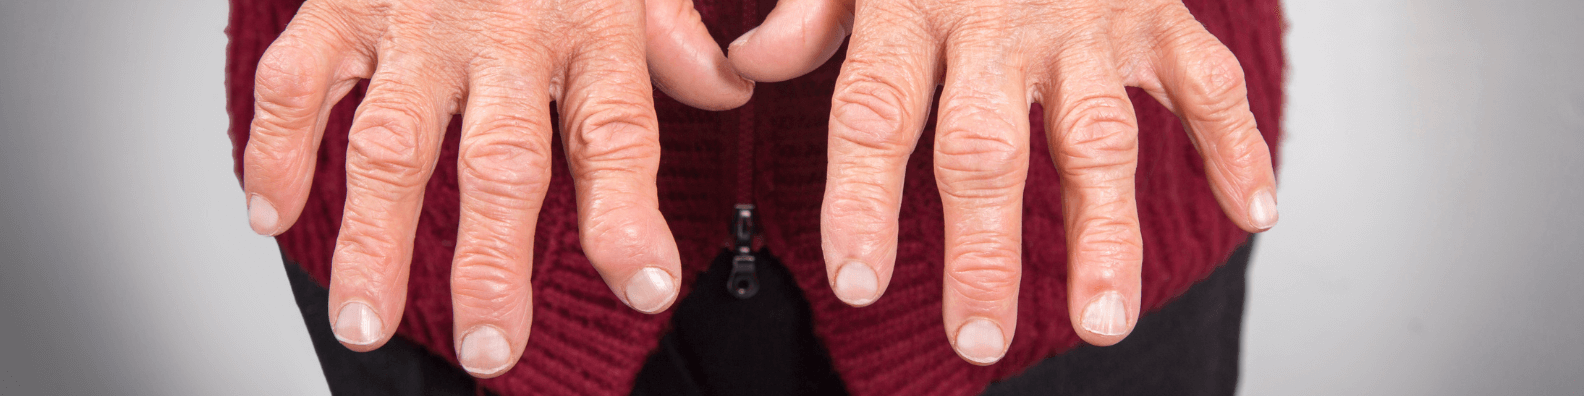 Arthritis due to chronic inflammation